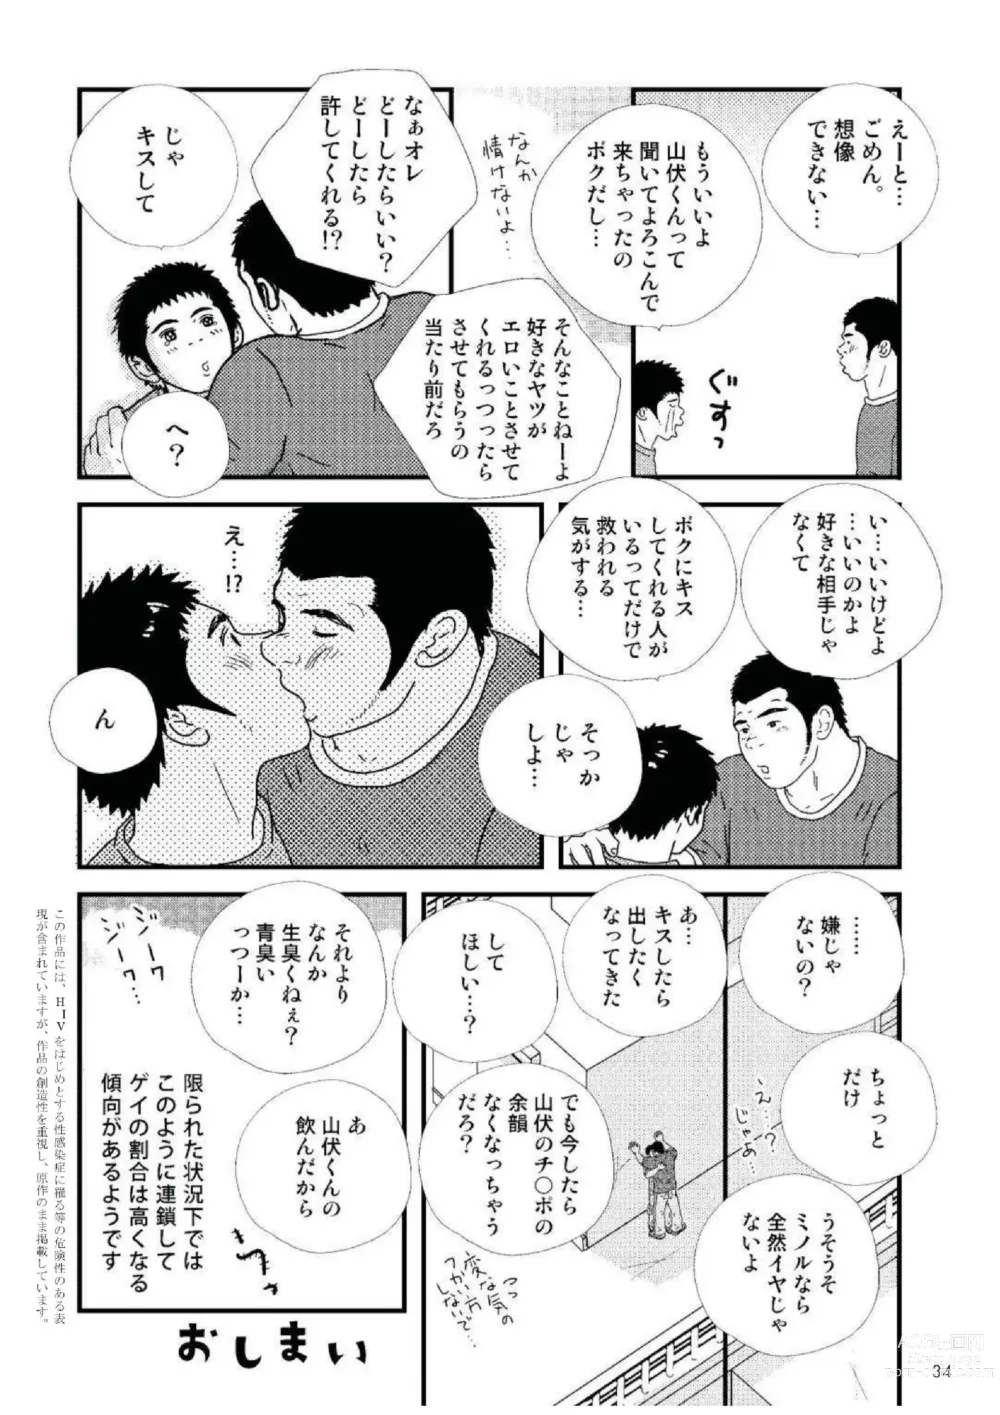 Page 16 of manga SUCK!